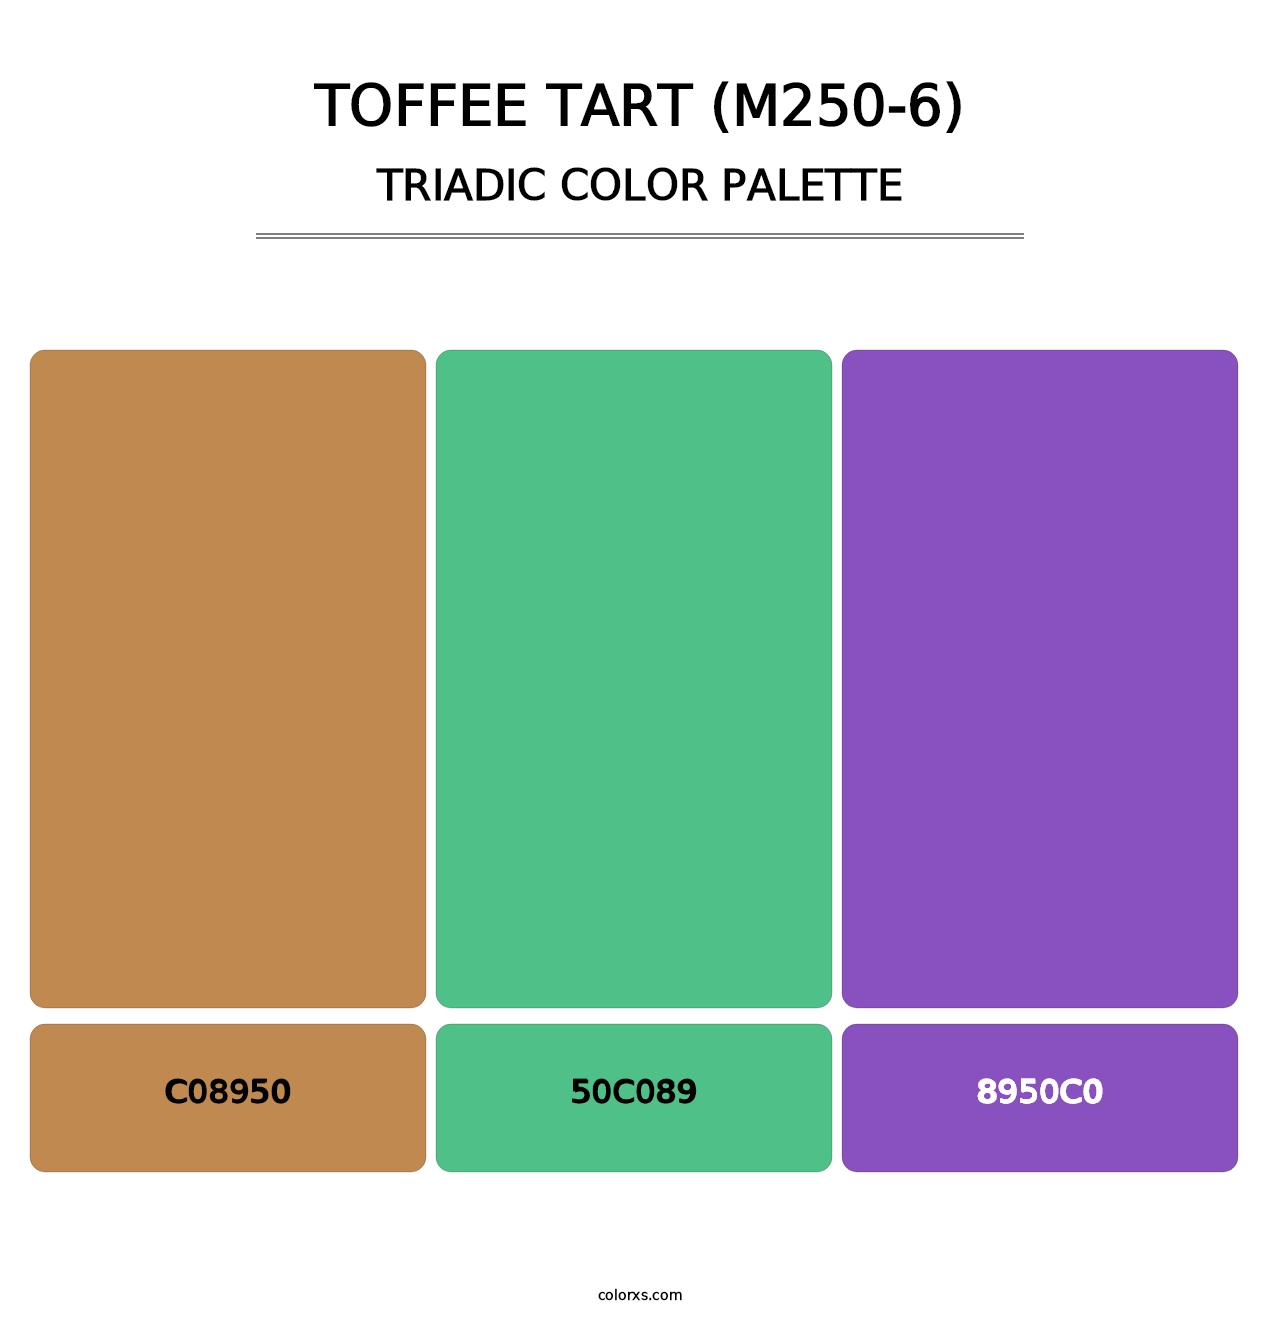 Toffee Tart (M250-6) - Triadic Color Palette